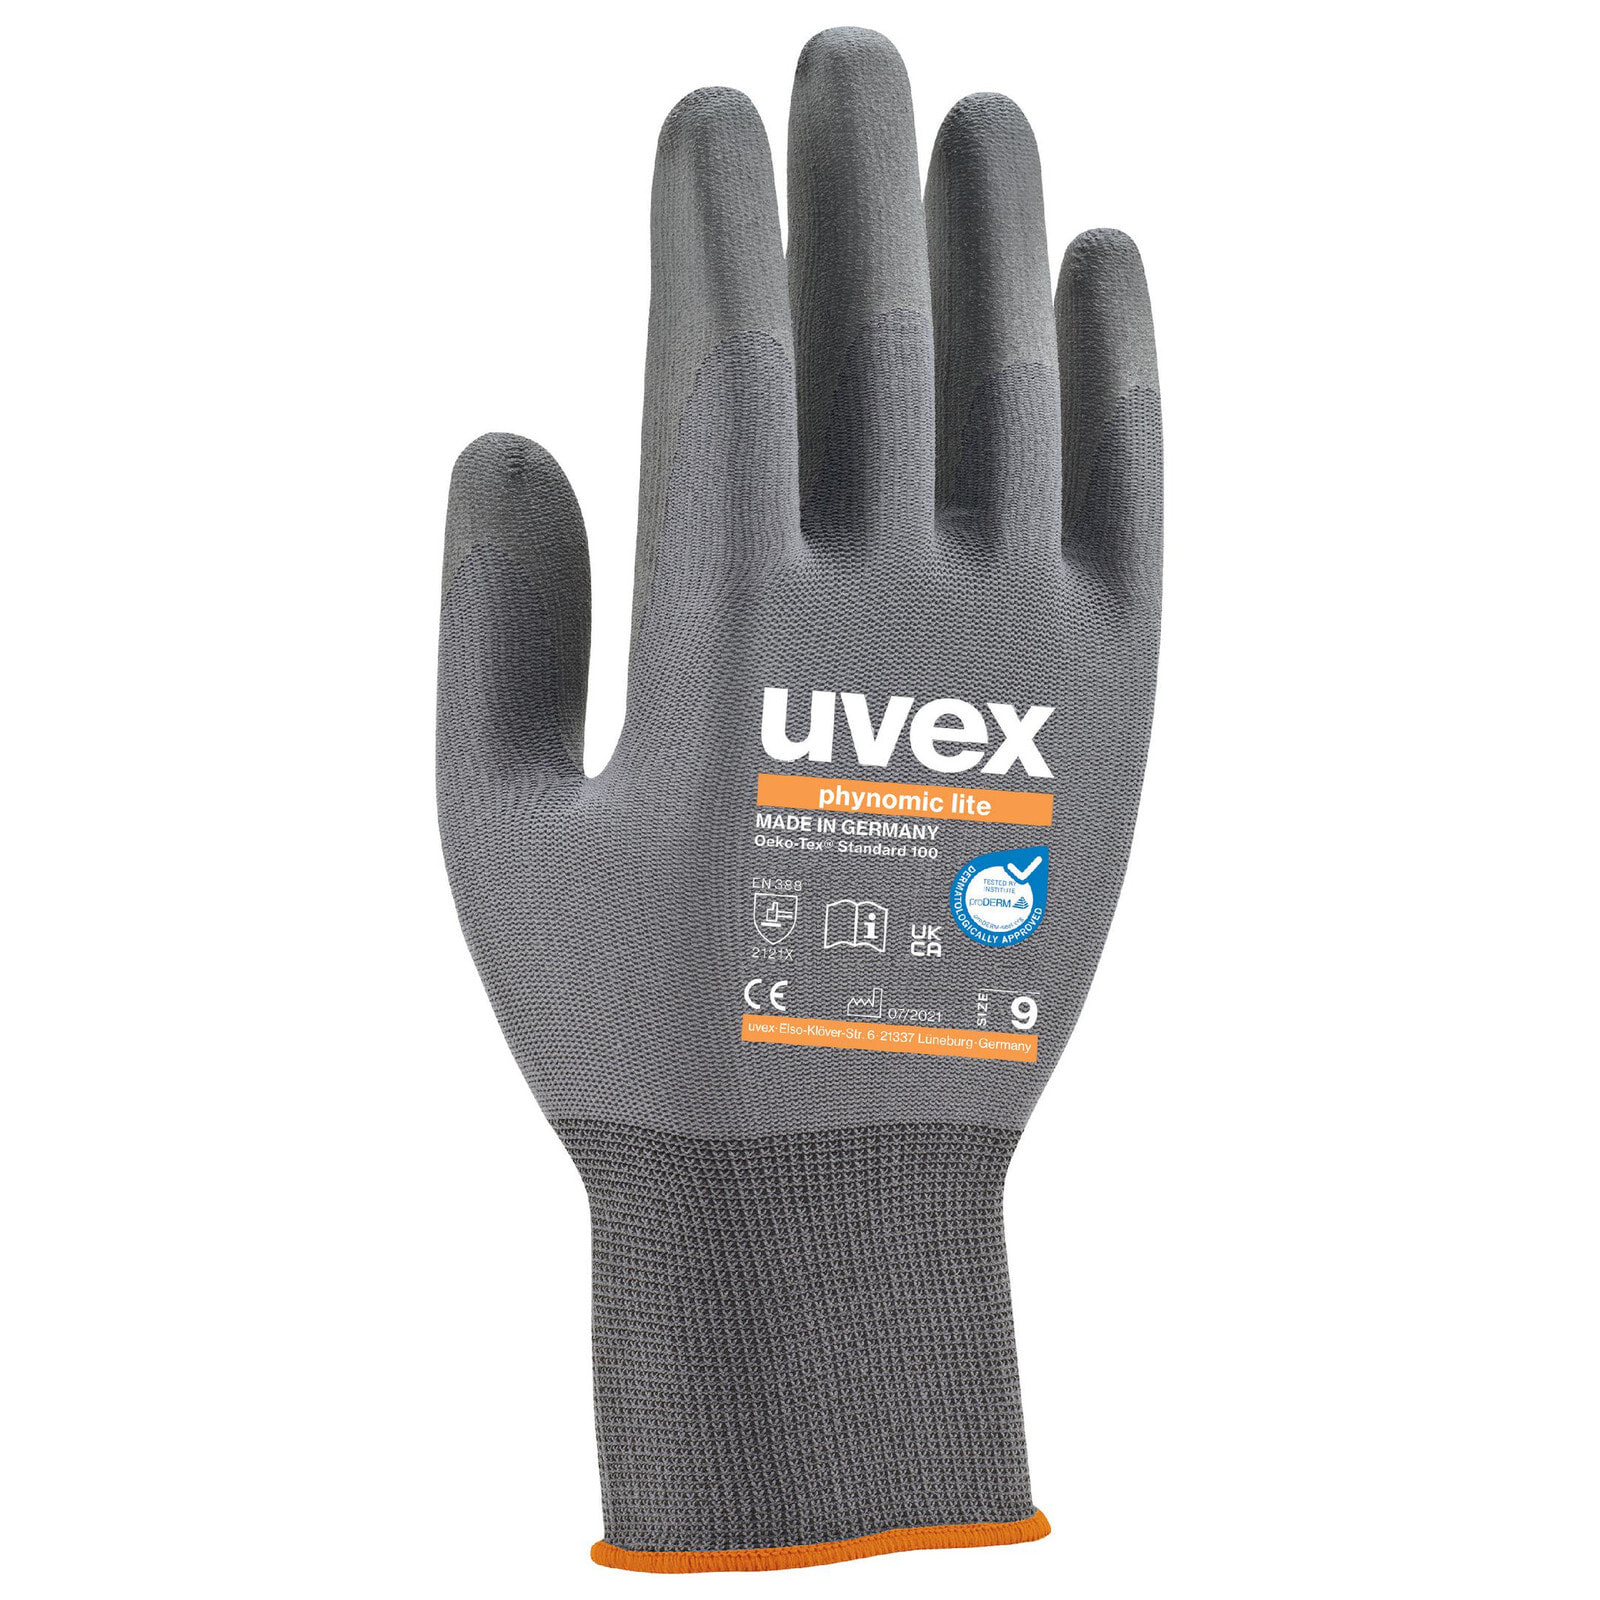 UVEX Arbeitsschutz 6004006 - Anthracite - Grey - EUE - Adult - Adult - Unisex - 1 pc(s)